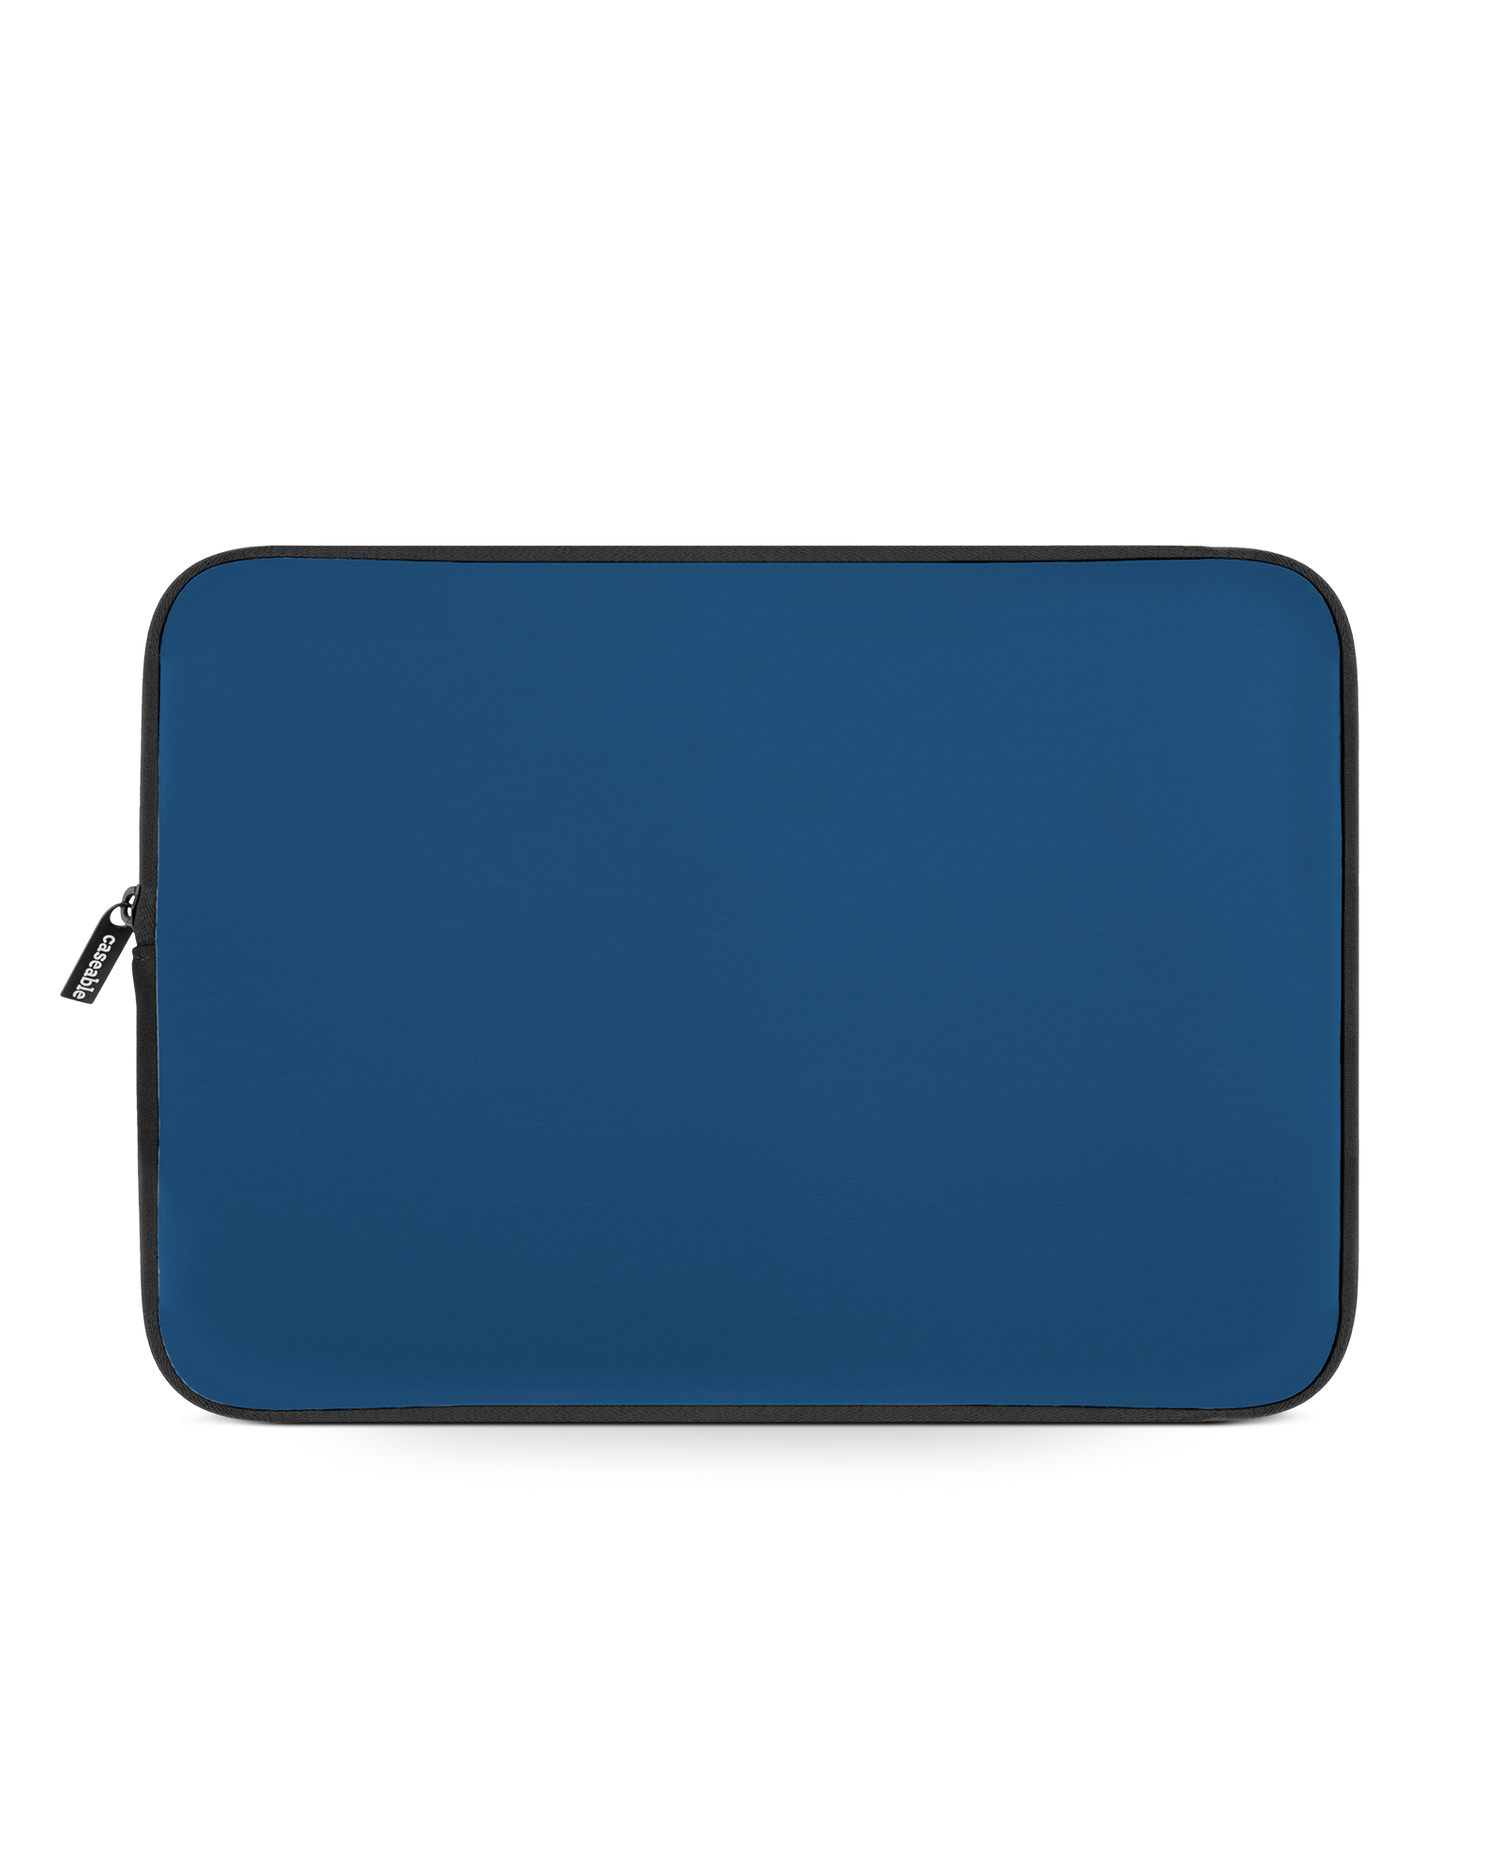 CLASSIC BLUE Laptophülle 13-14 Zoll: Vorderansicht